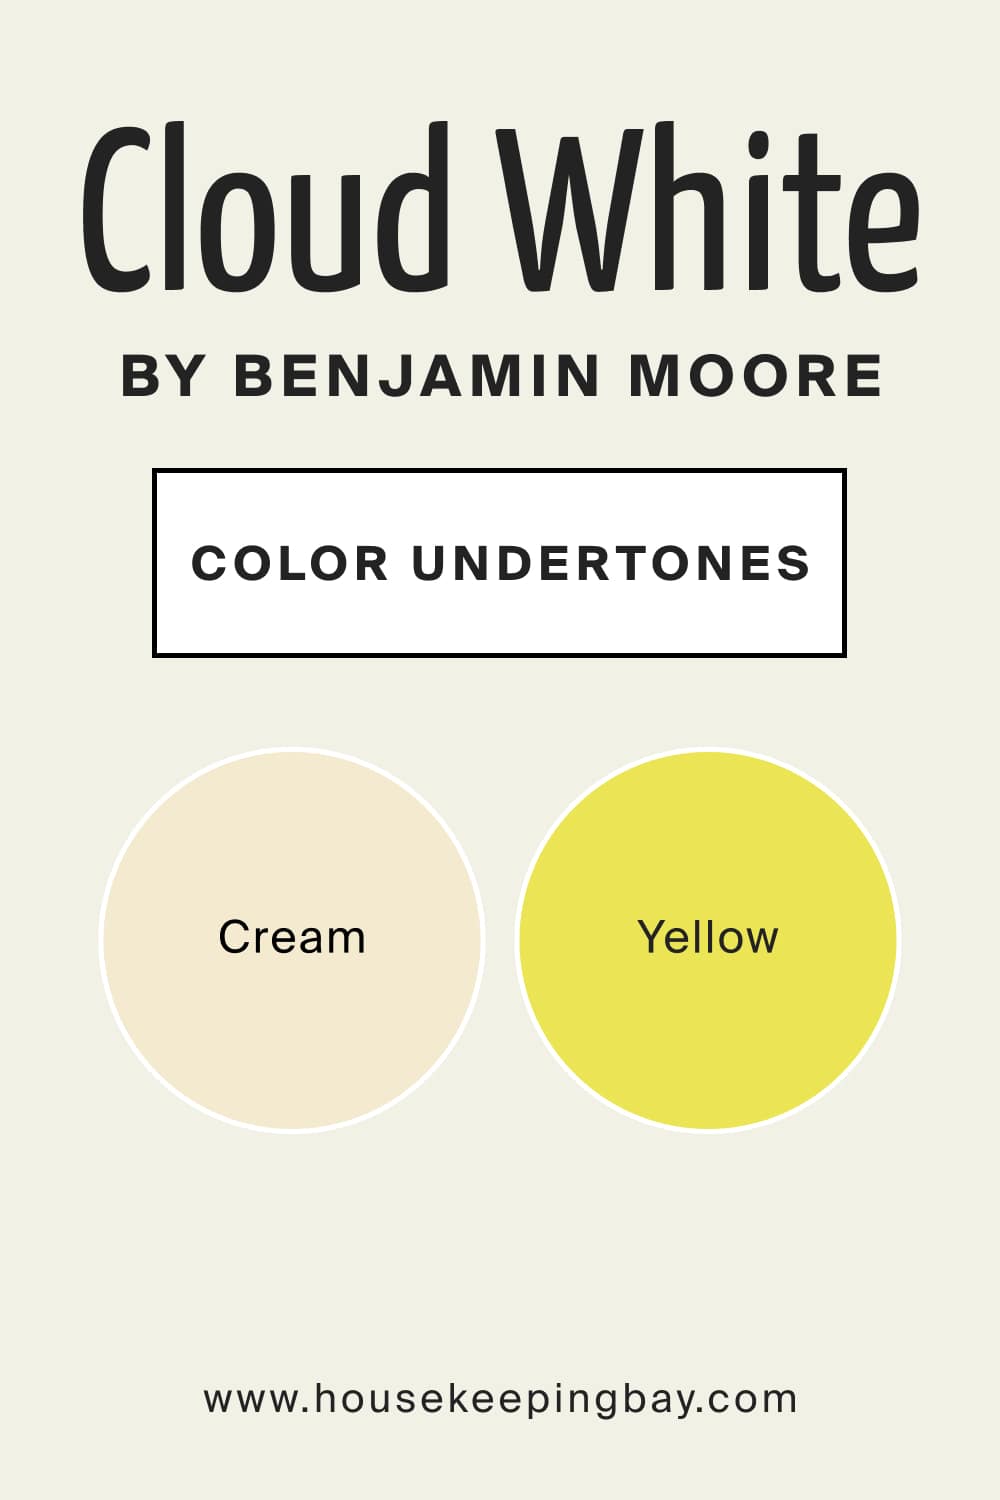 Cloud White OC 130 by Benjamin Moore Color Undertones